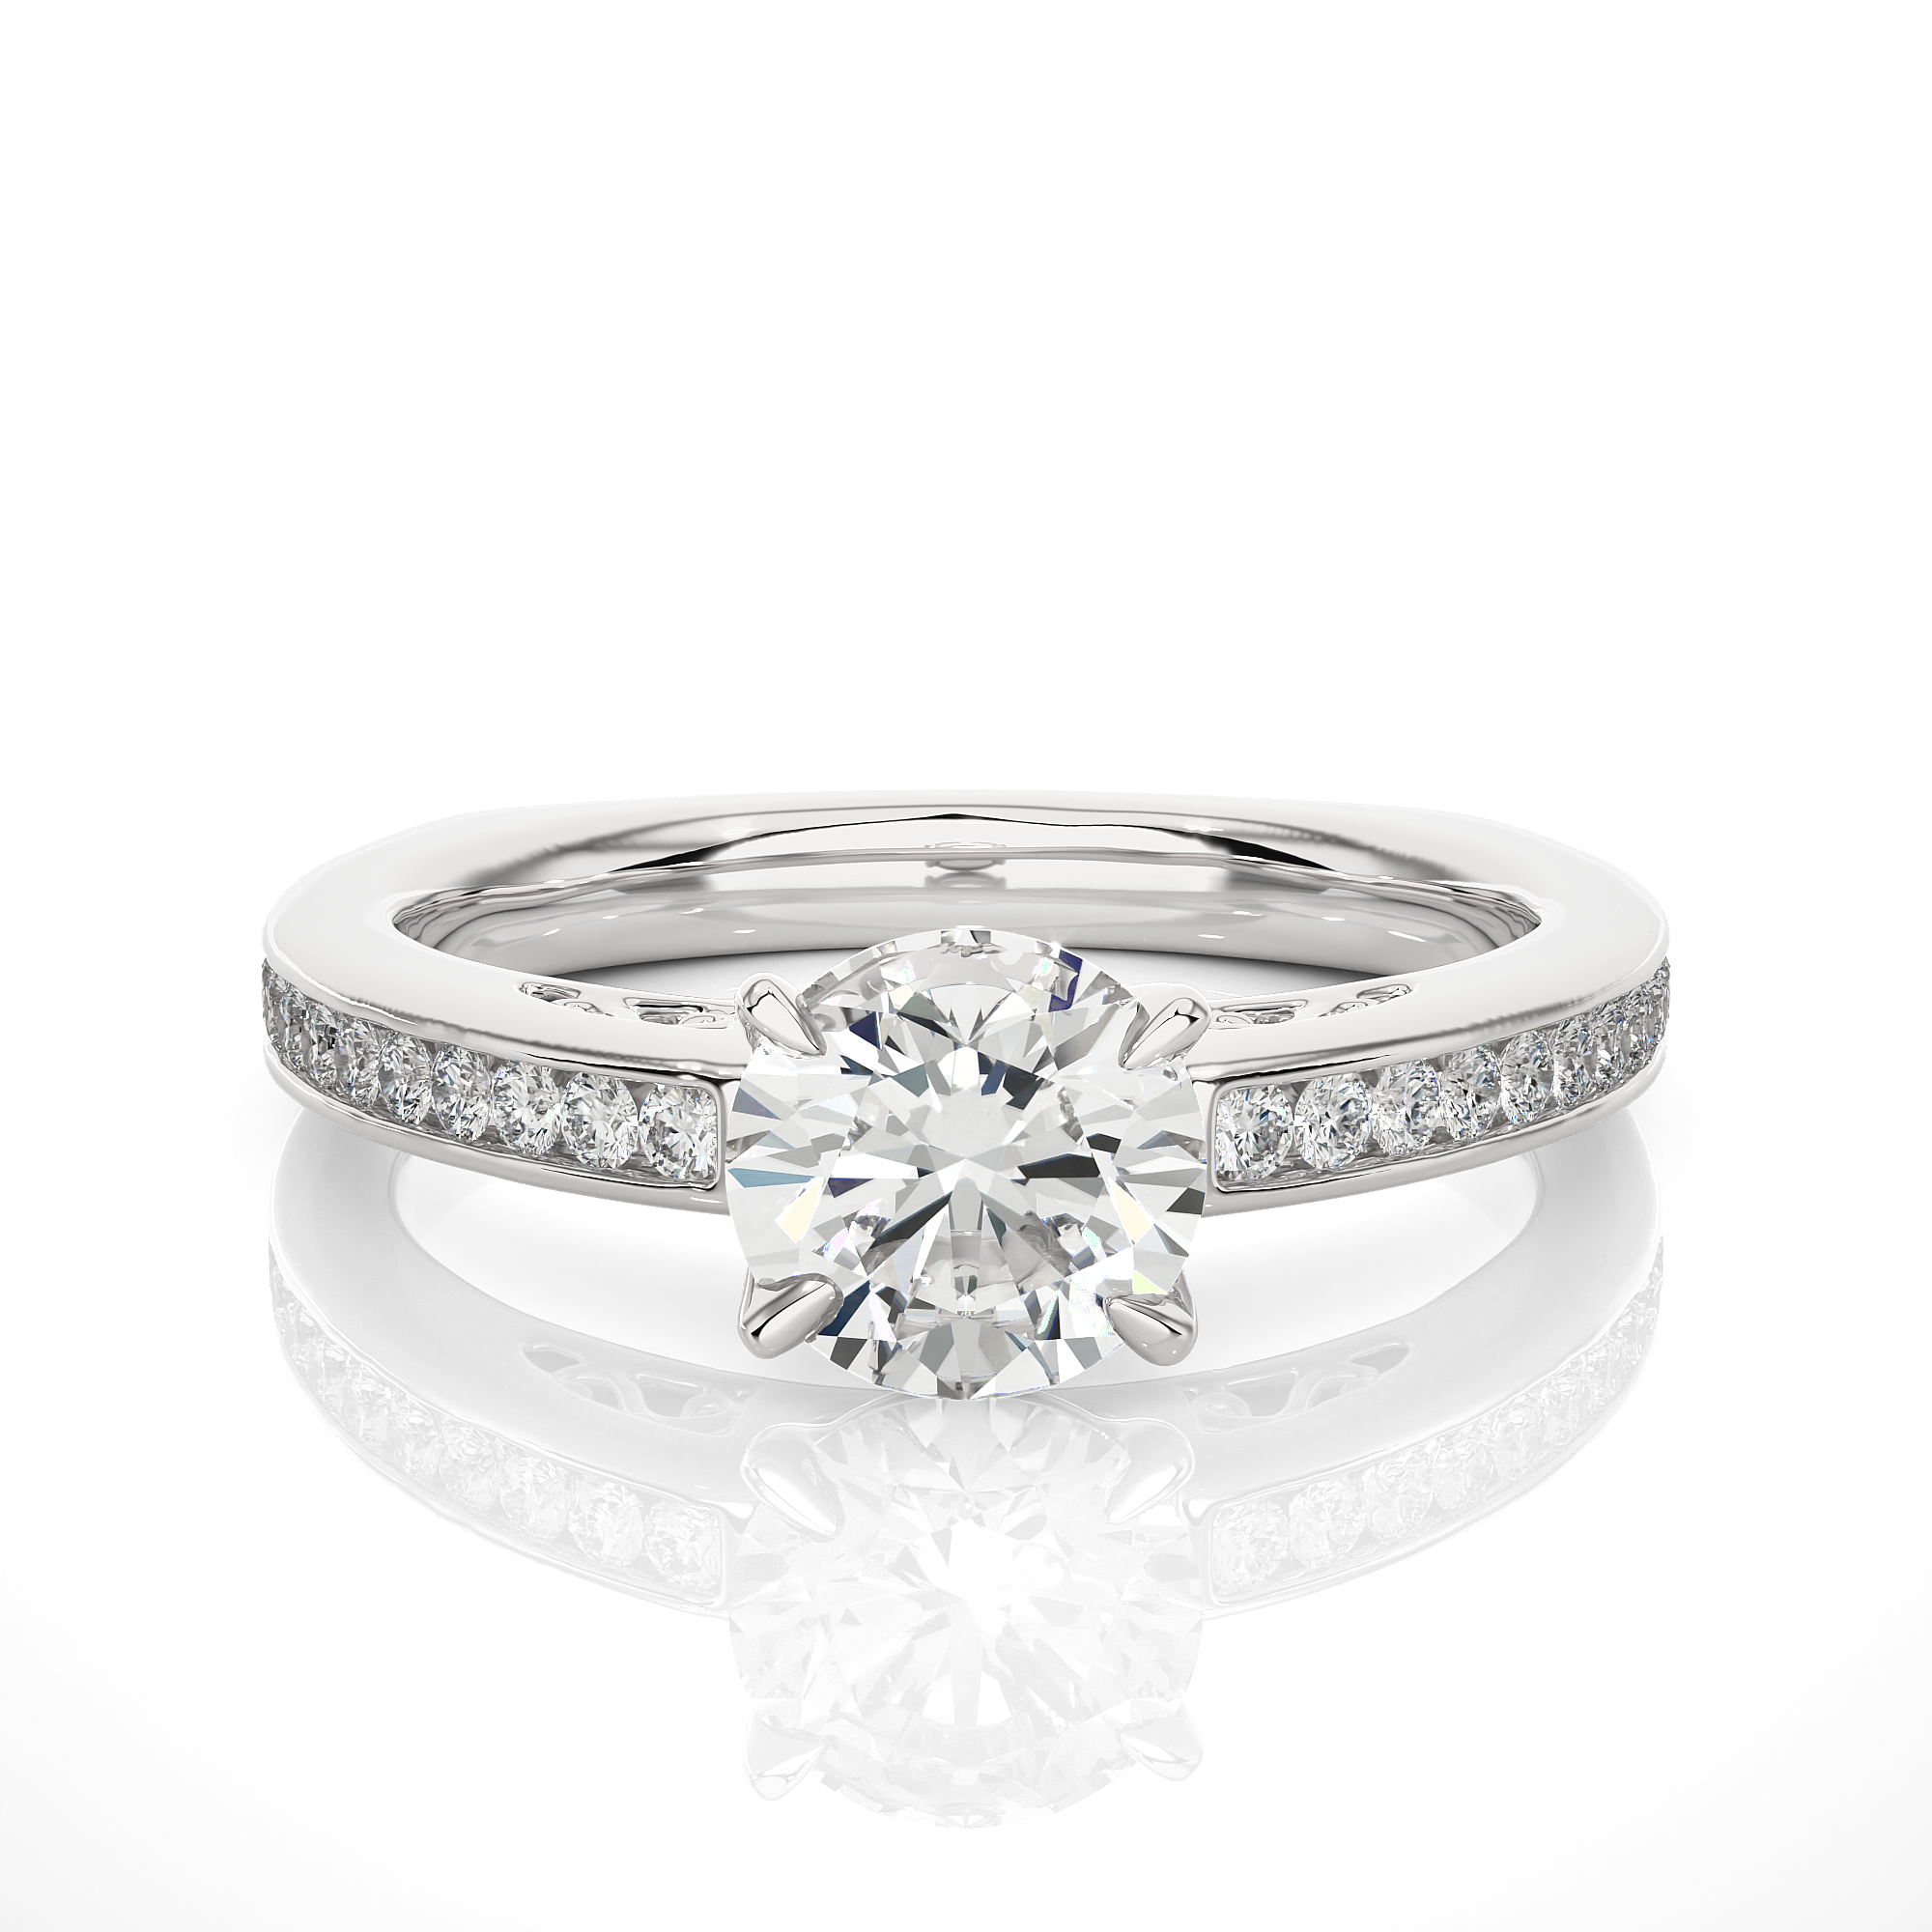 1.27Ct Solitaire Round Cut Diamond Ring in White Gold - Blu Diamonds